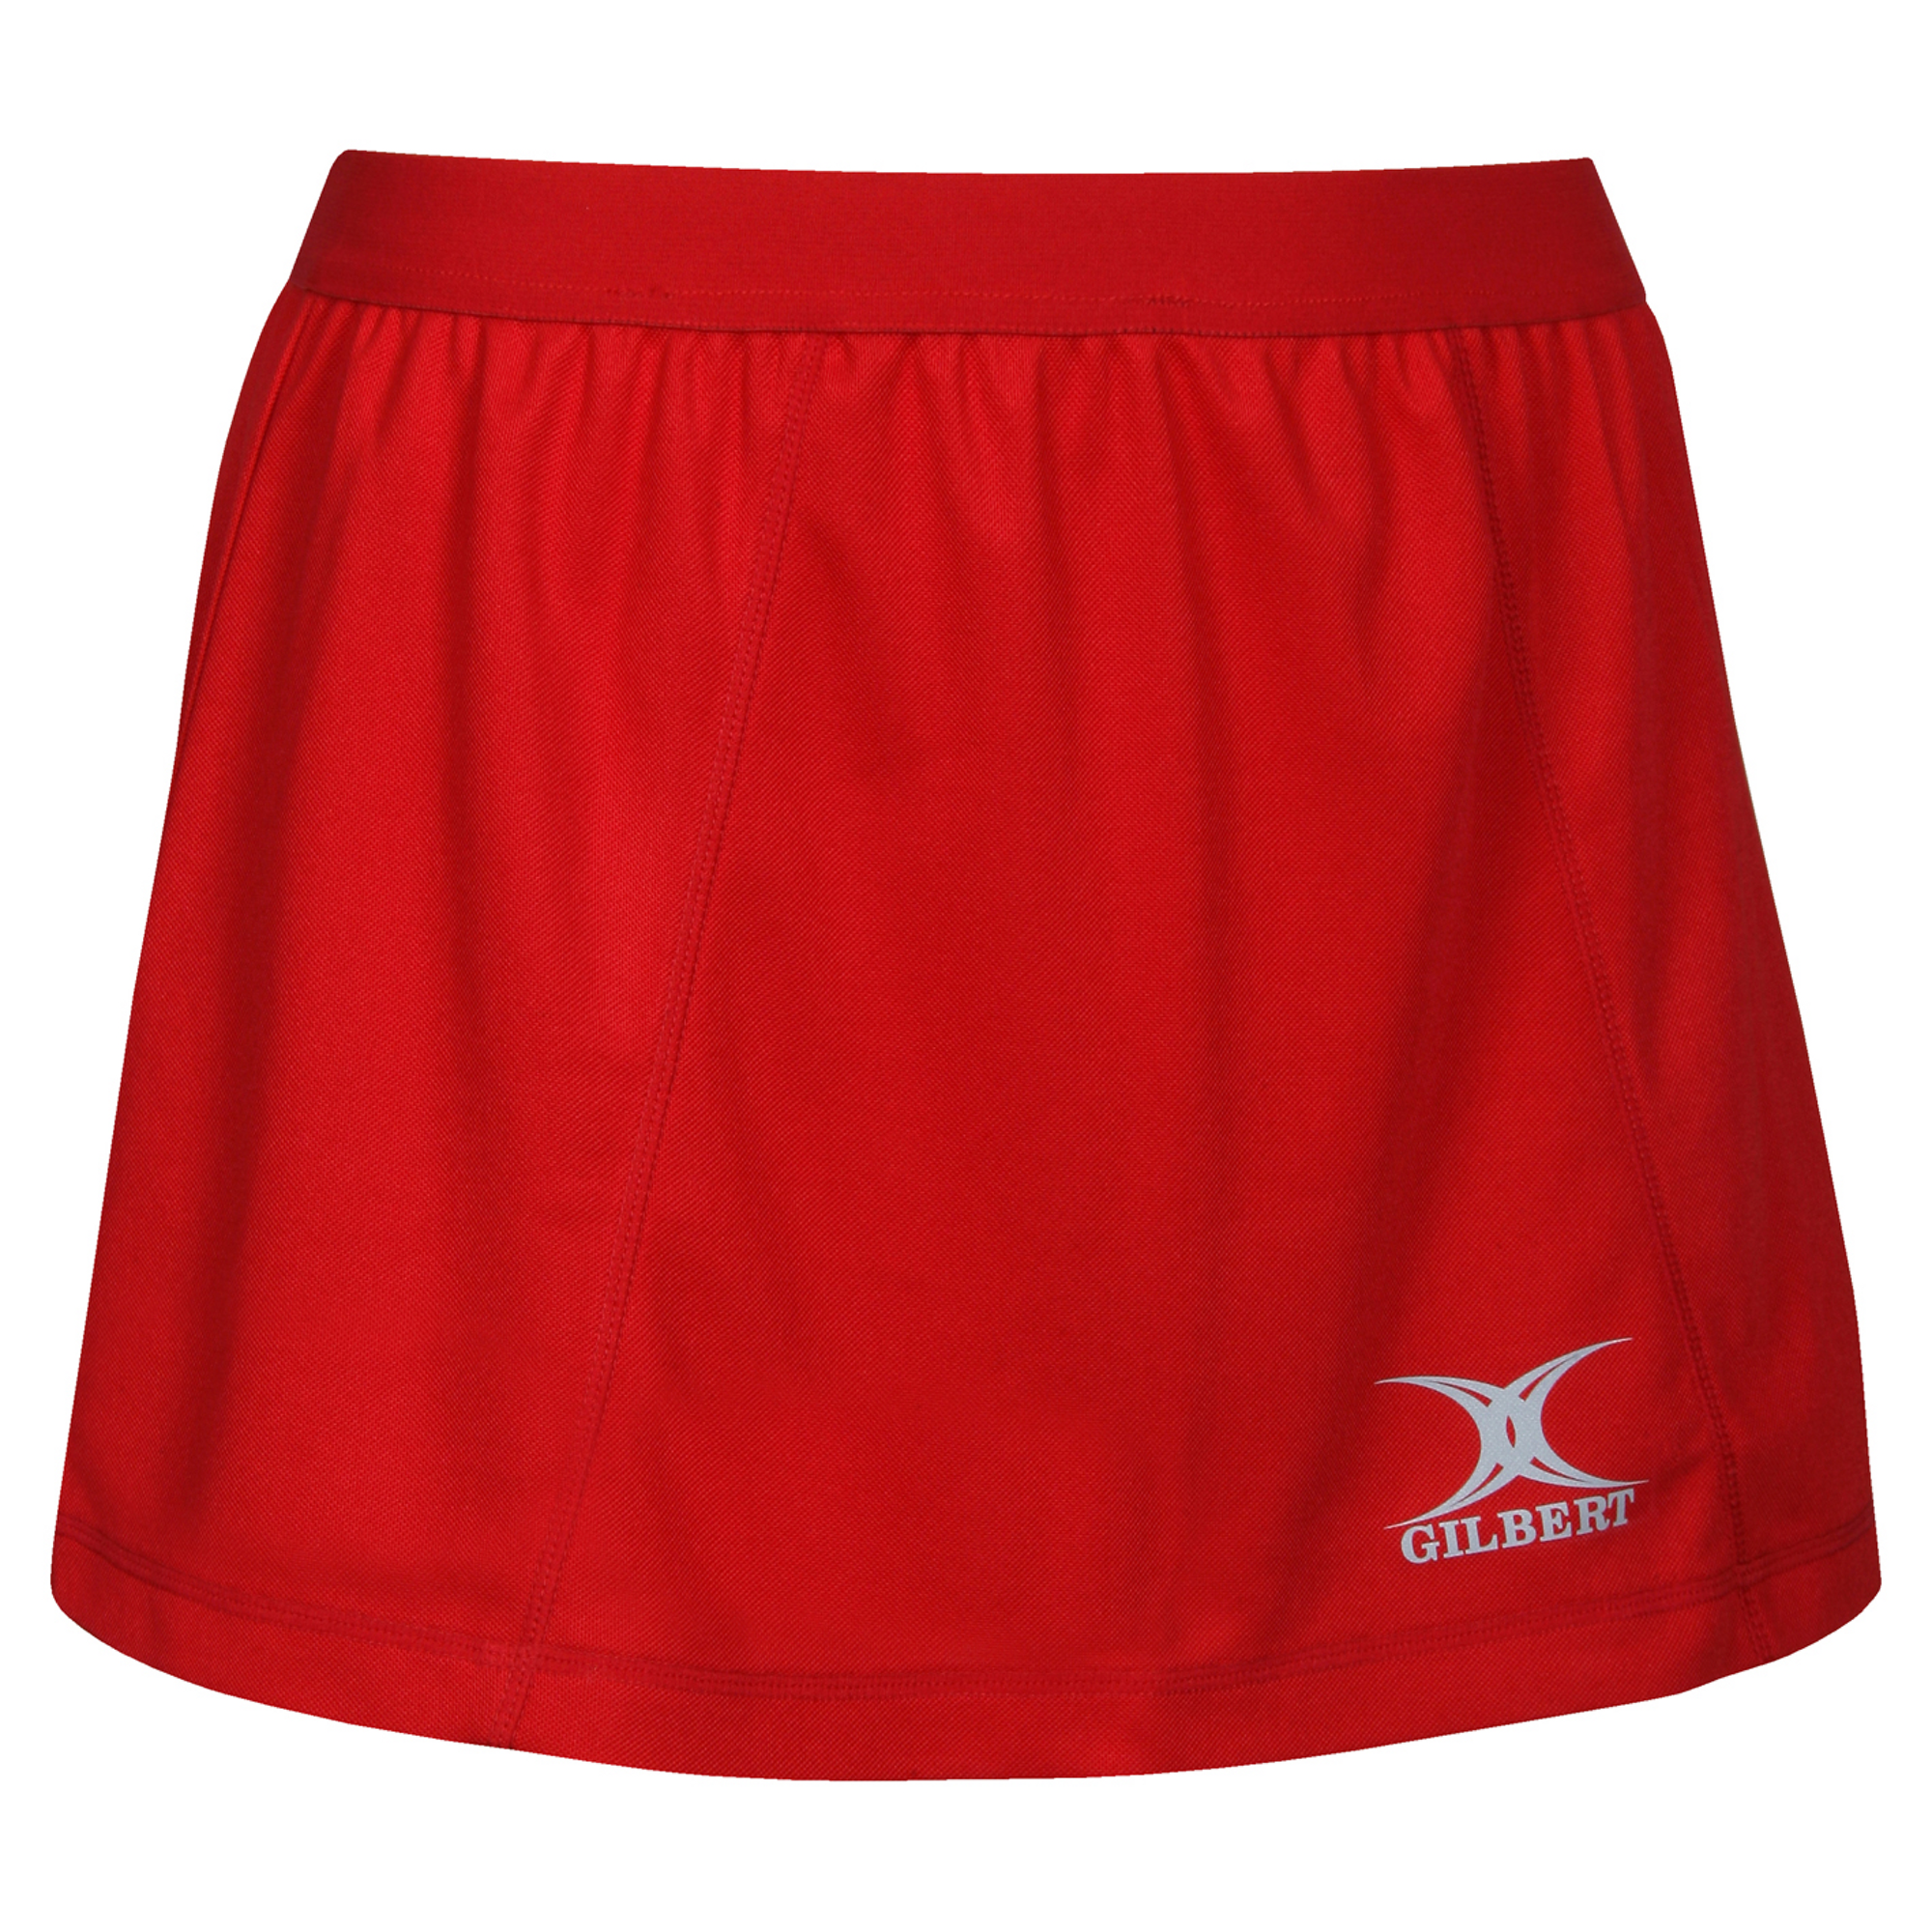 Gilbert Blaze Netball Skirt 12 Red